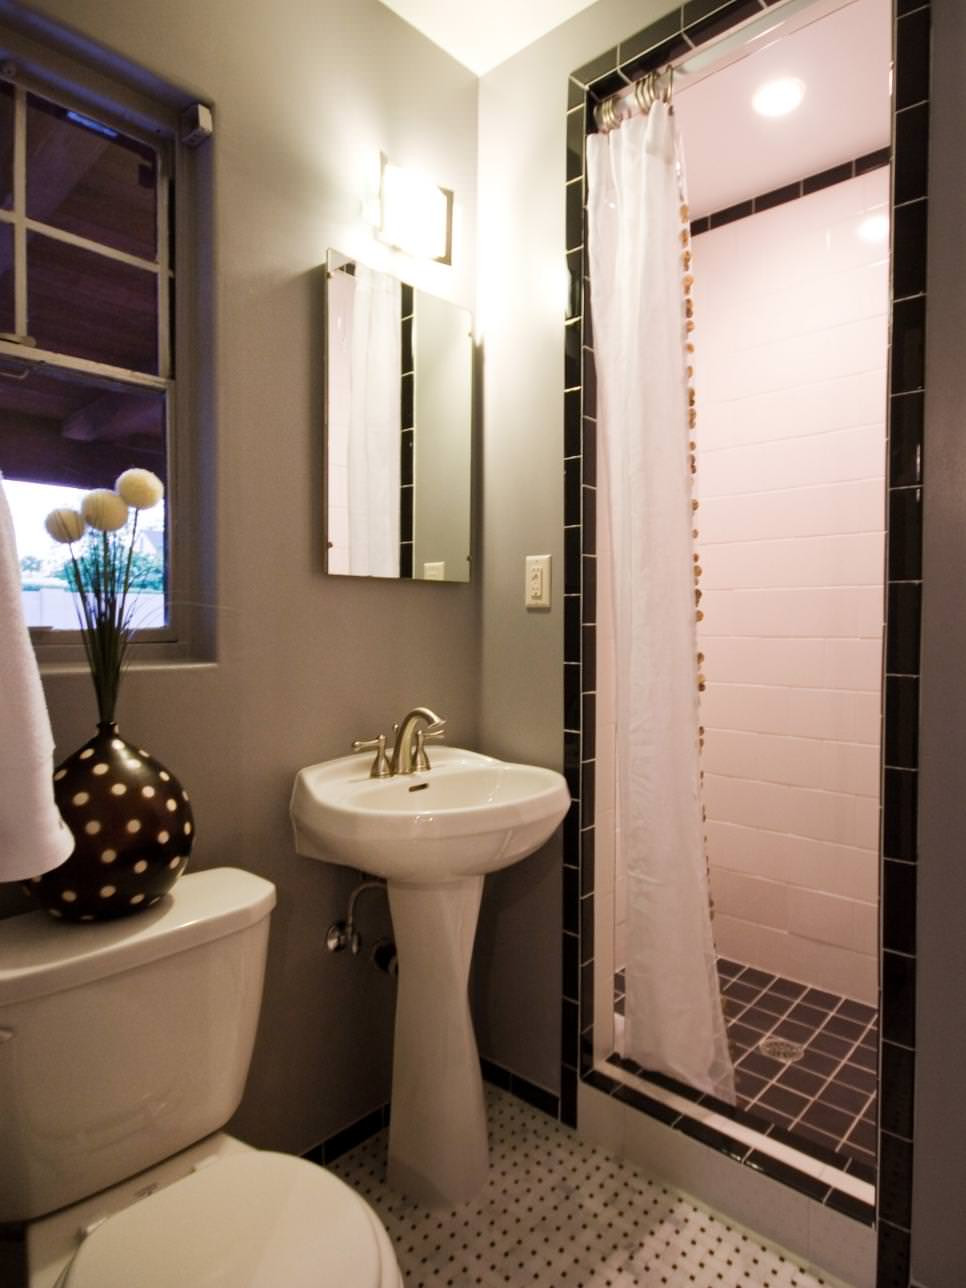 Bathroom Shower Design Ideas
 24 Bathroom Pedestal Sinks Ideas Designs